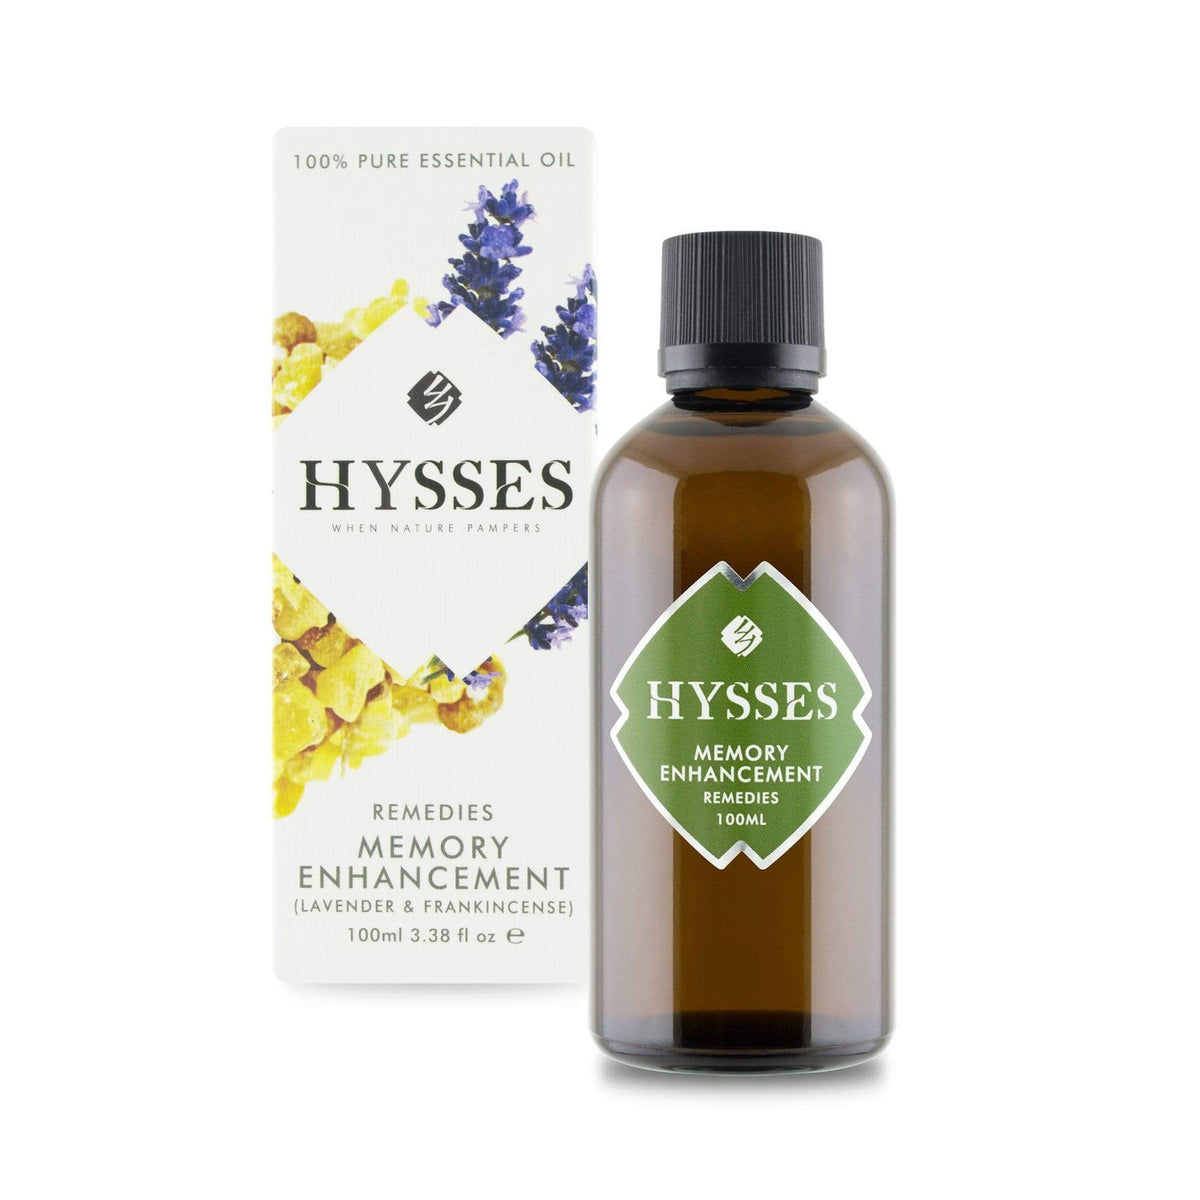 Hysses Essential Oil 100ml Remedies, Memory Enhancement